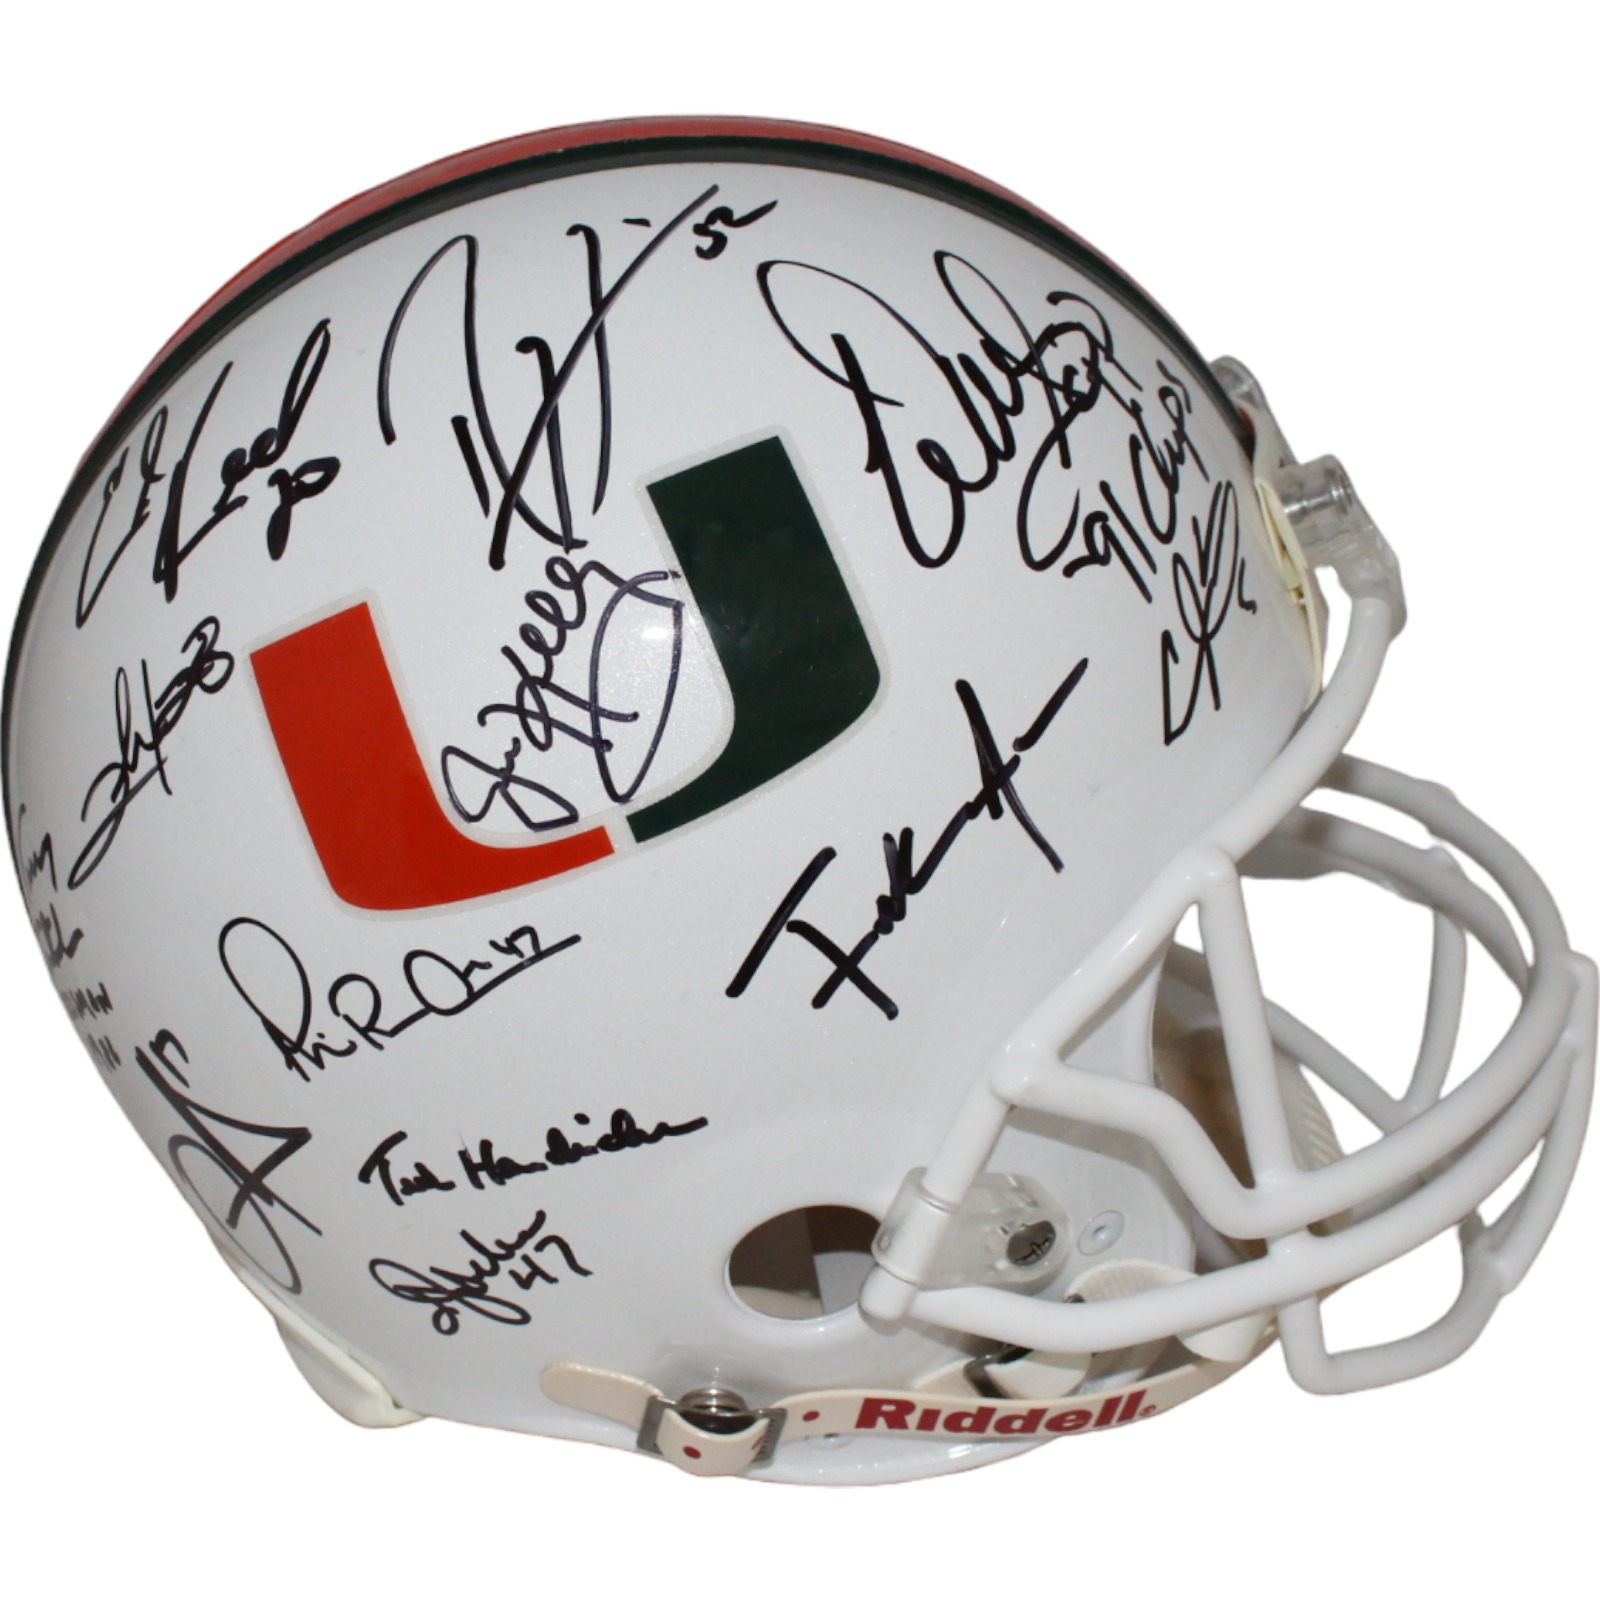 Miami Hurricane Legends Ed Reed Ray Lewis +10 Pro Helmet BAS/JSA